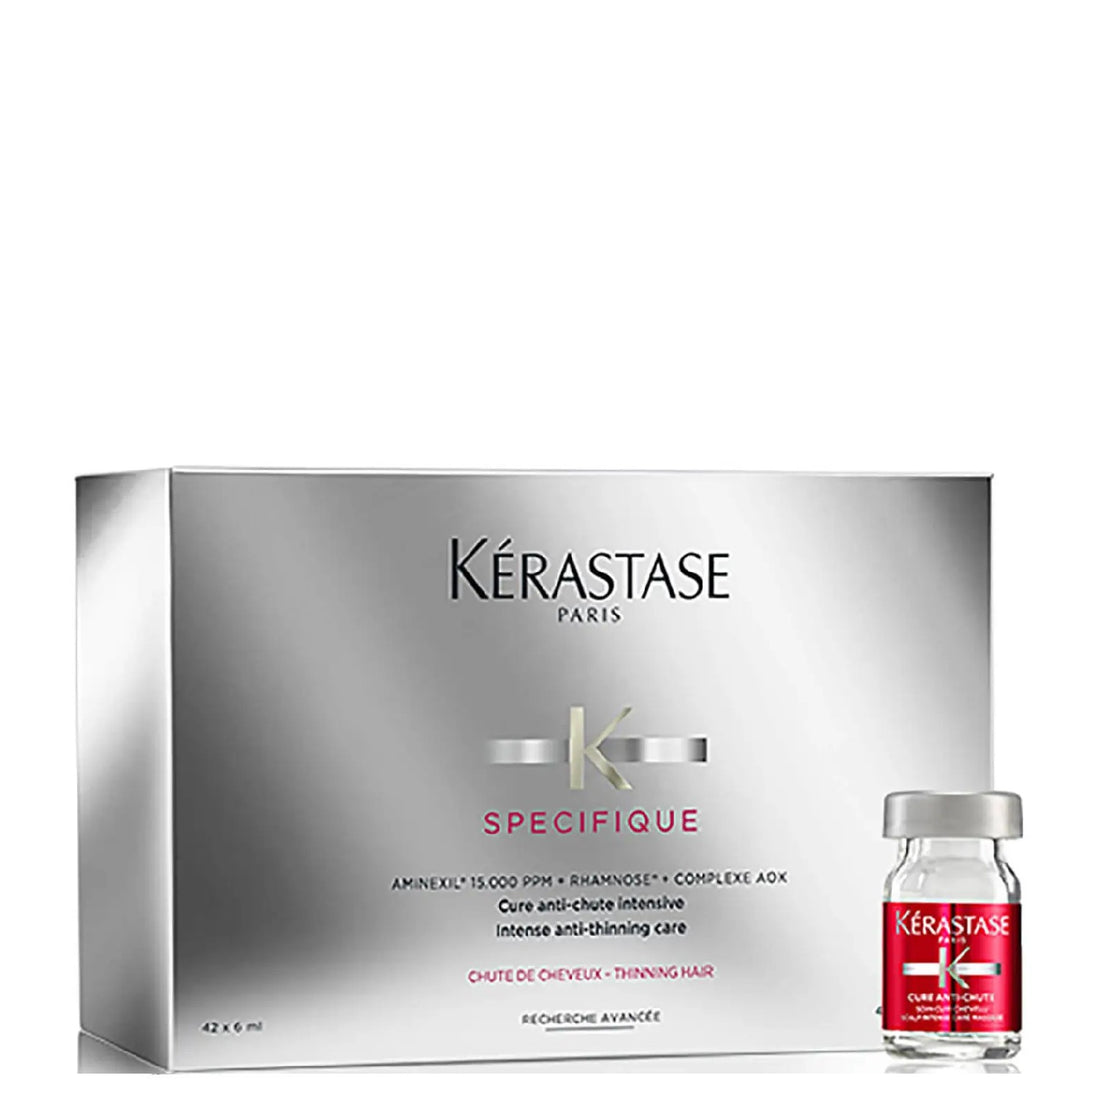 Kerastase Specifique Cure Anti-Chute Treatment